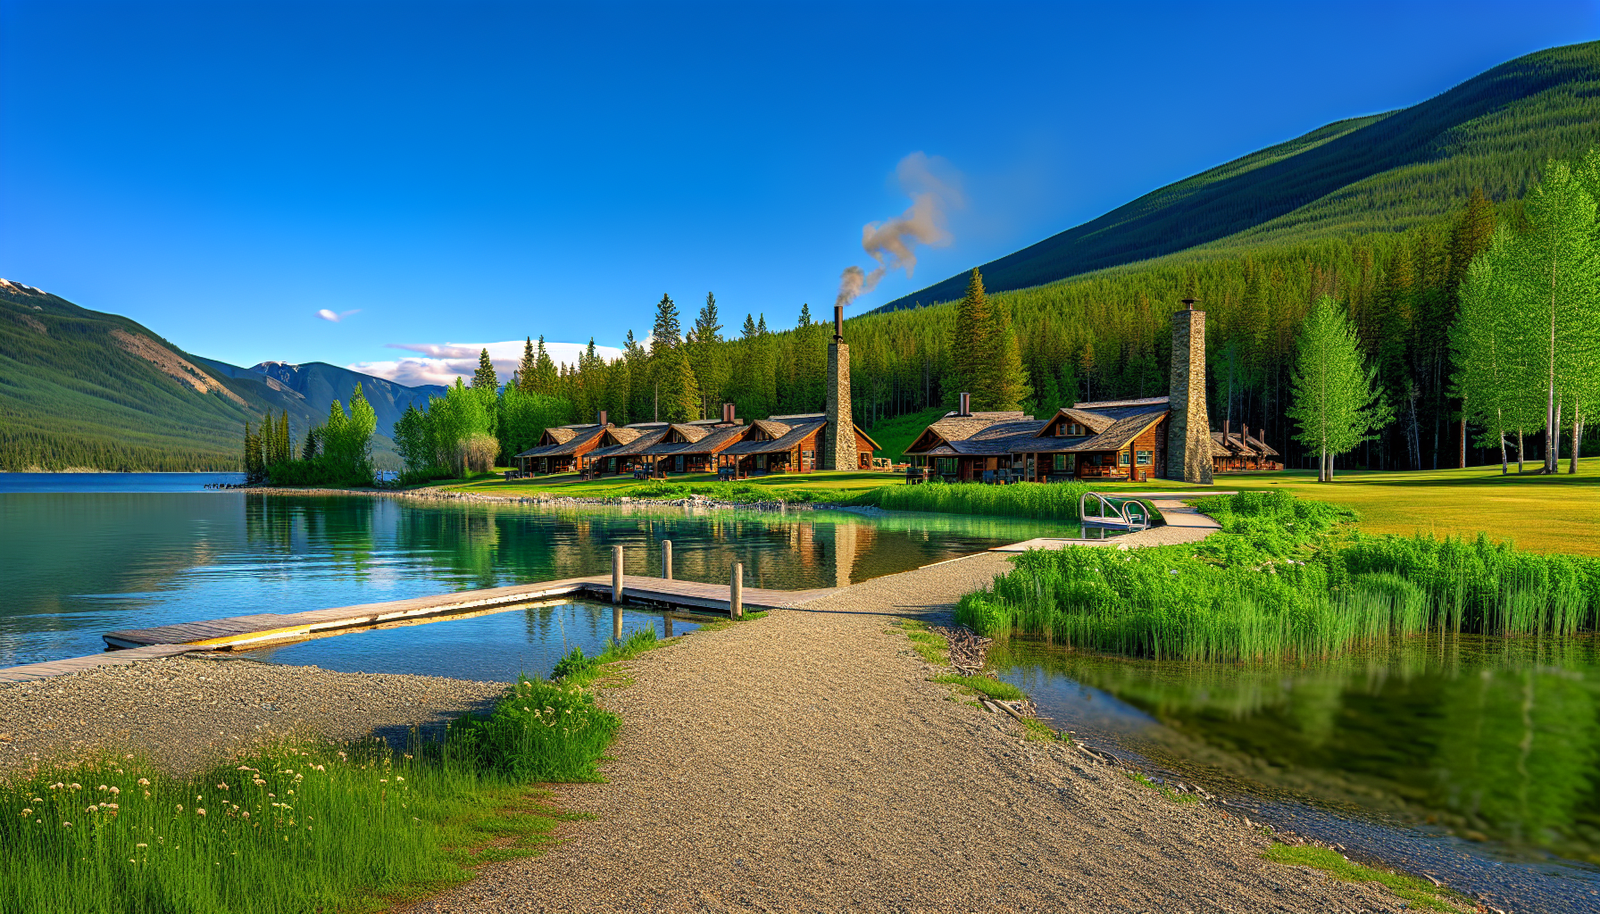 Picturesque lakeside lodgings near Kootenay Lake